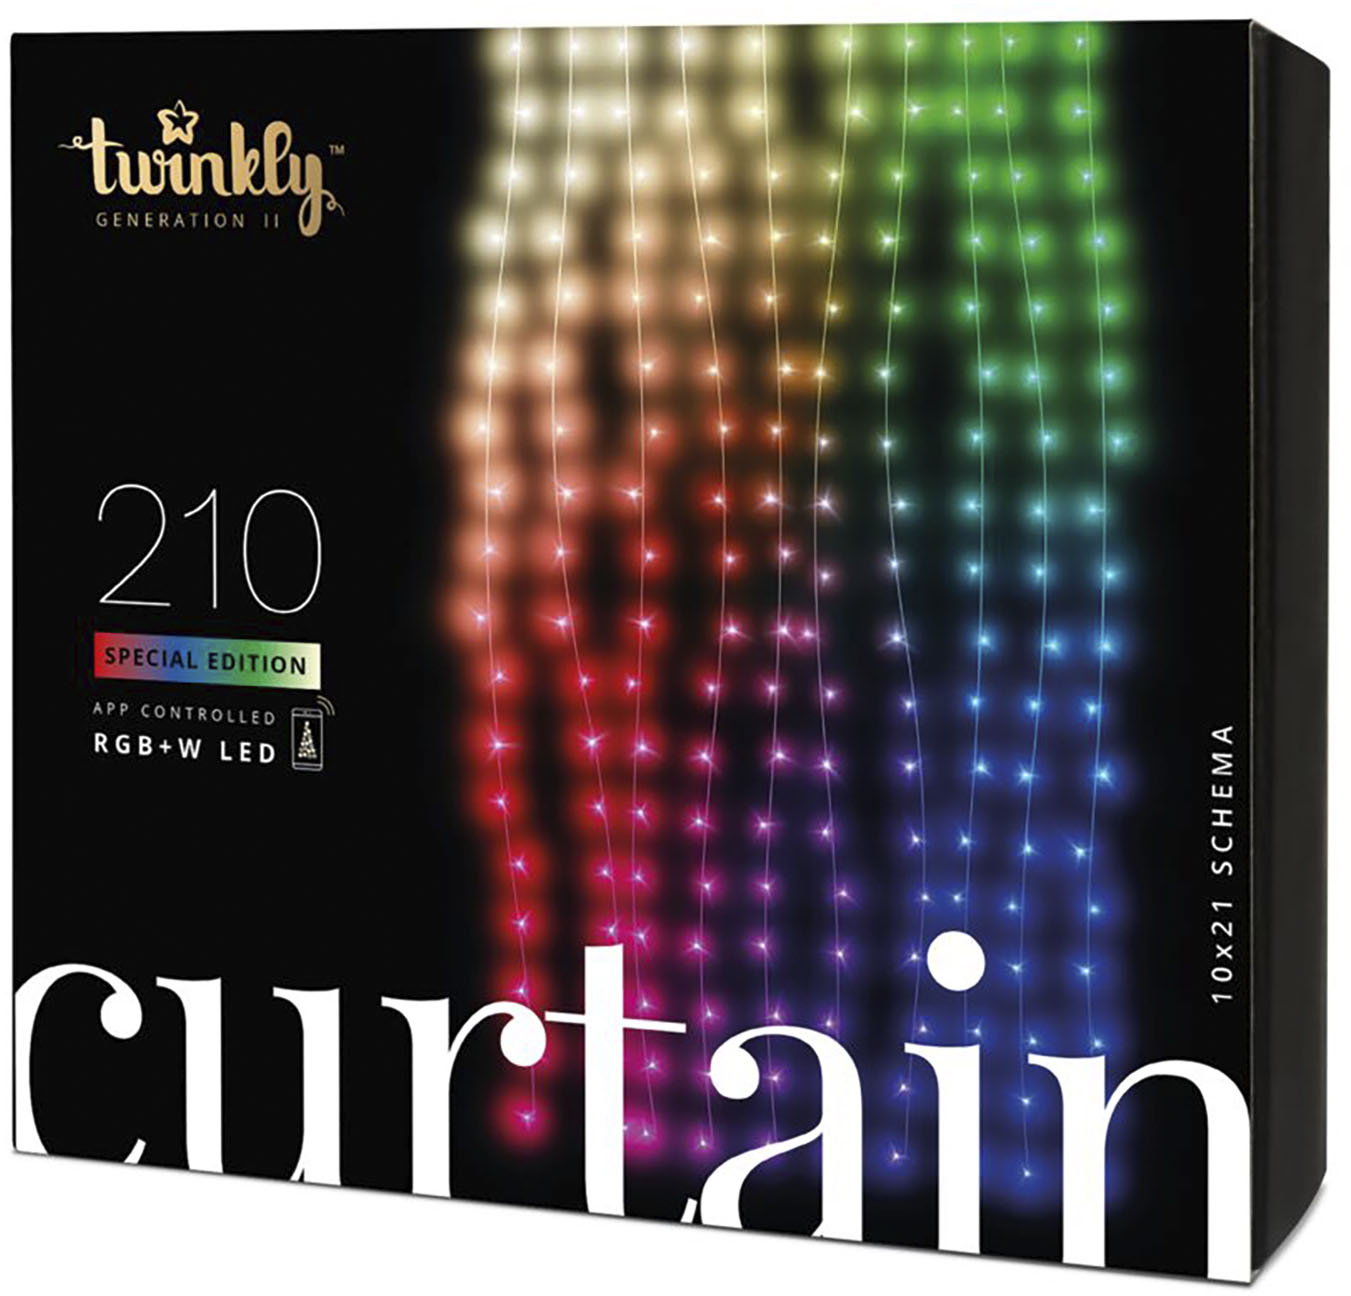 Twinkly - Smart Light Curtain 210 RGB + LED Generation II - White